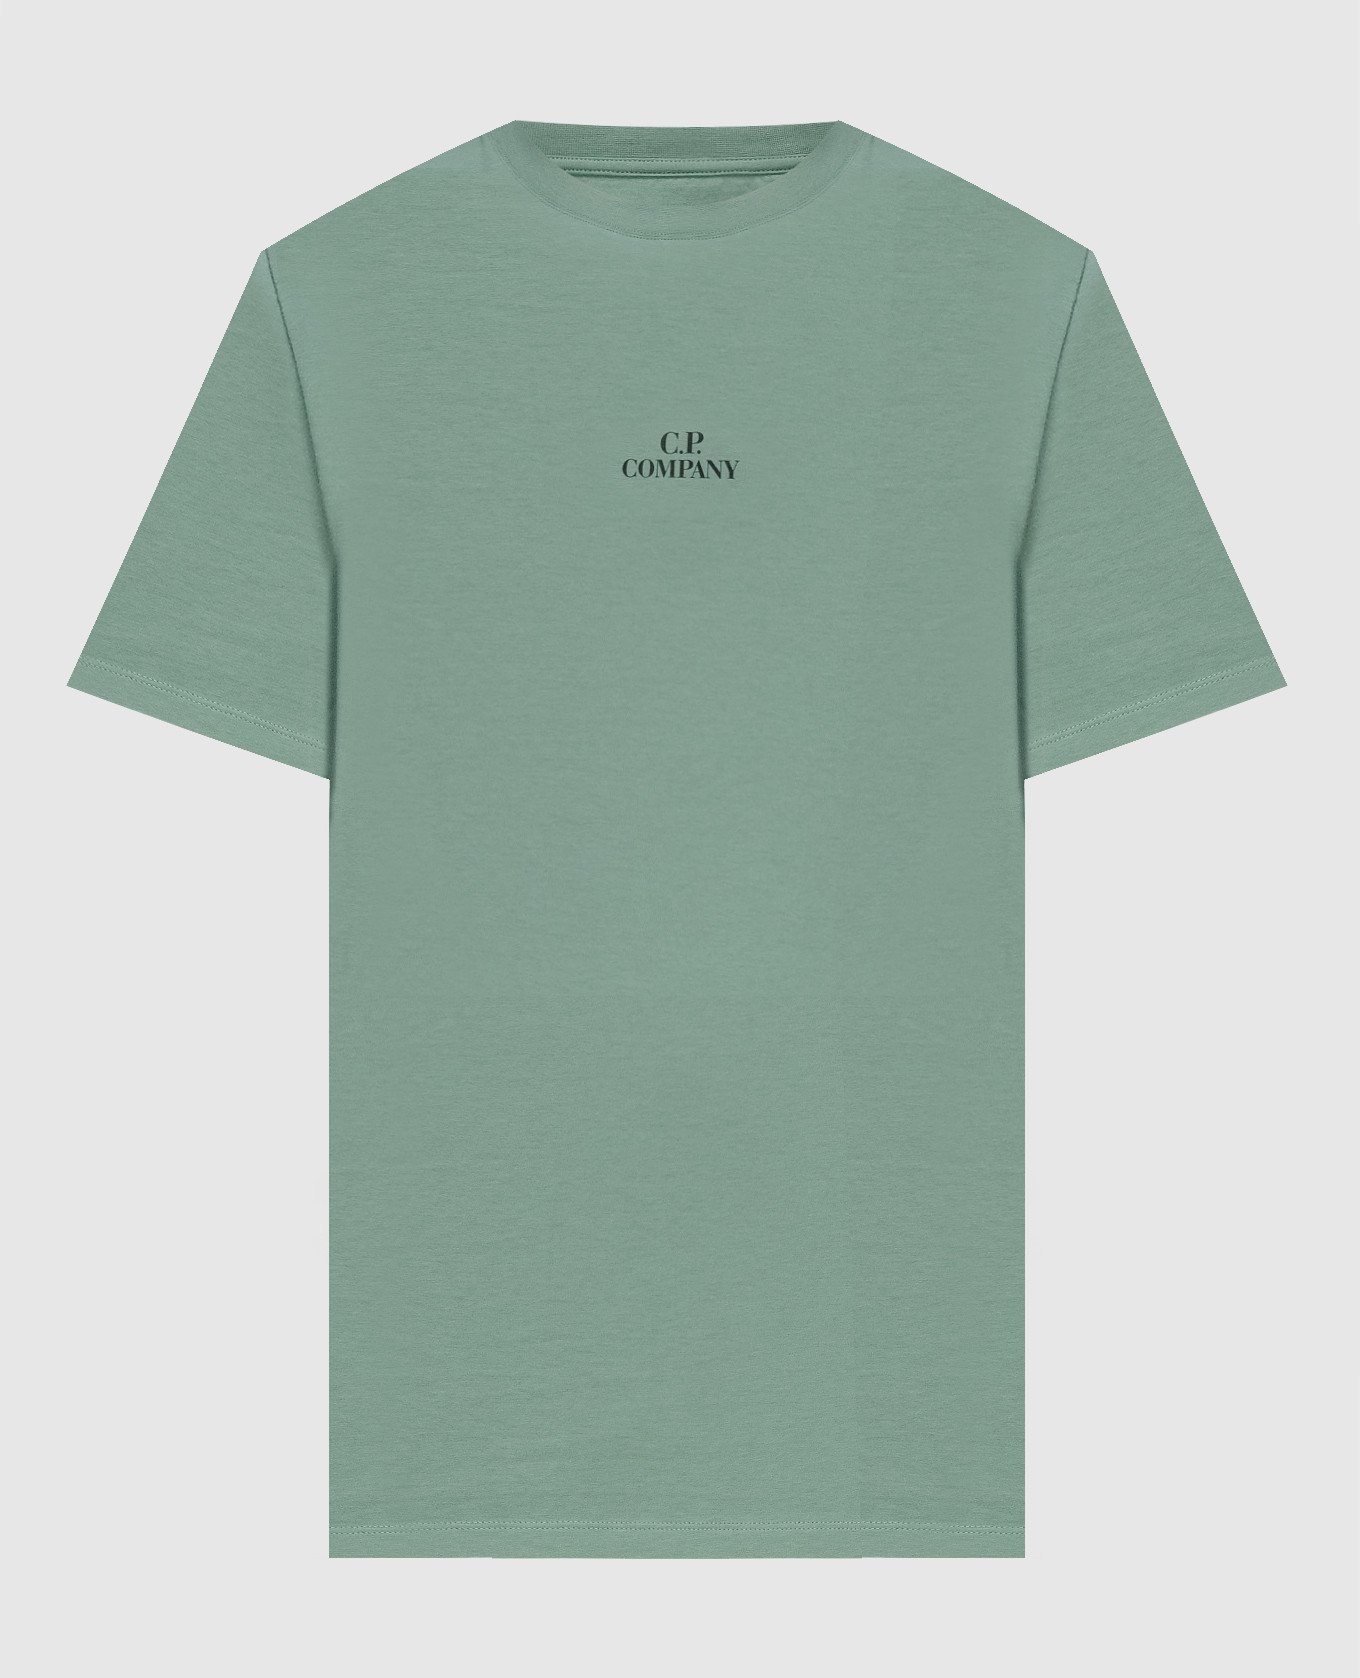 Green t-shirt with logo print